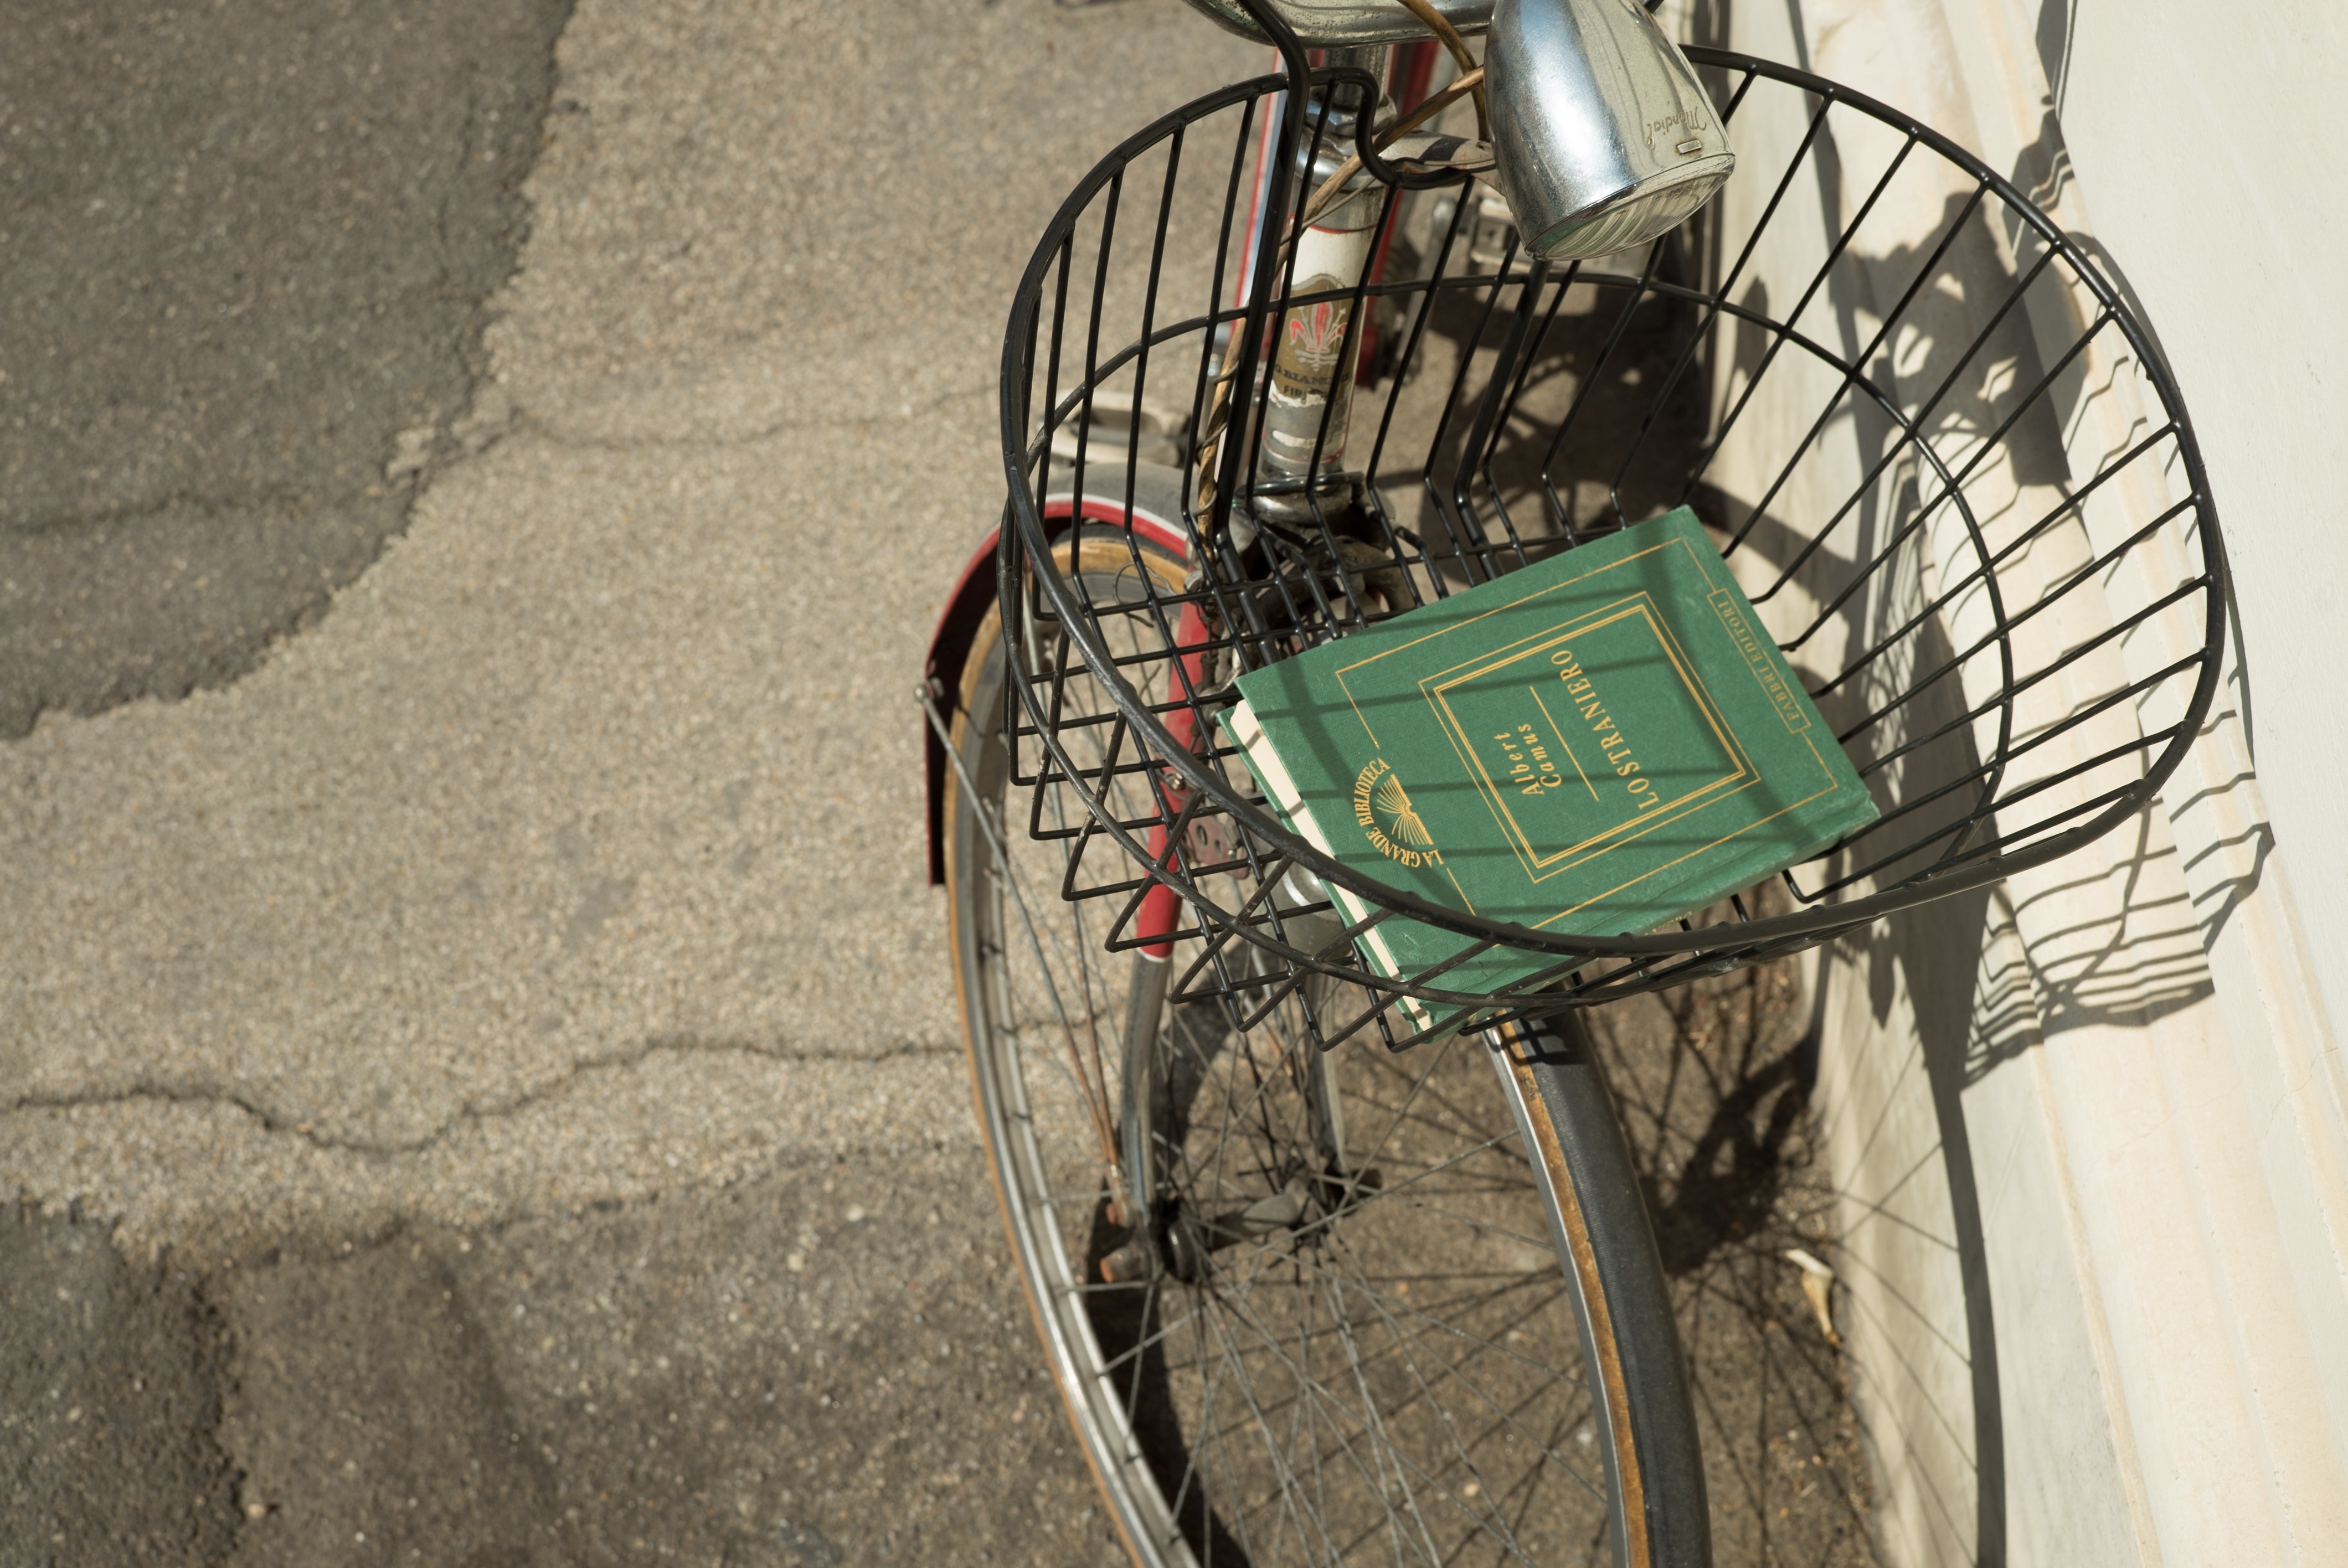 green book in black bicycle basket